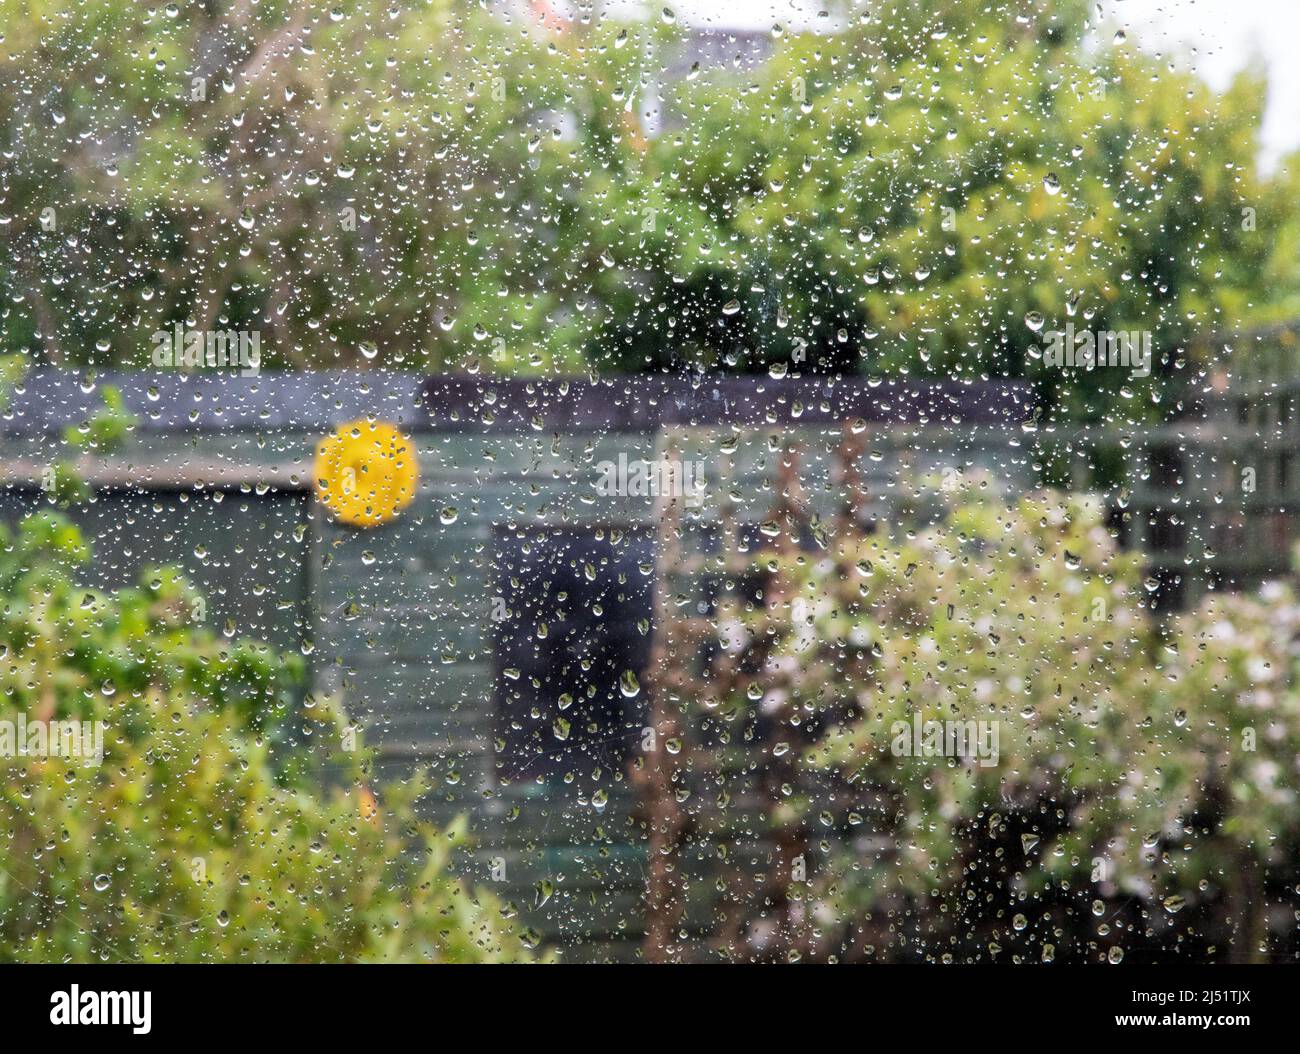 Rain drops on a window. Stock Photo